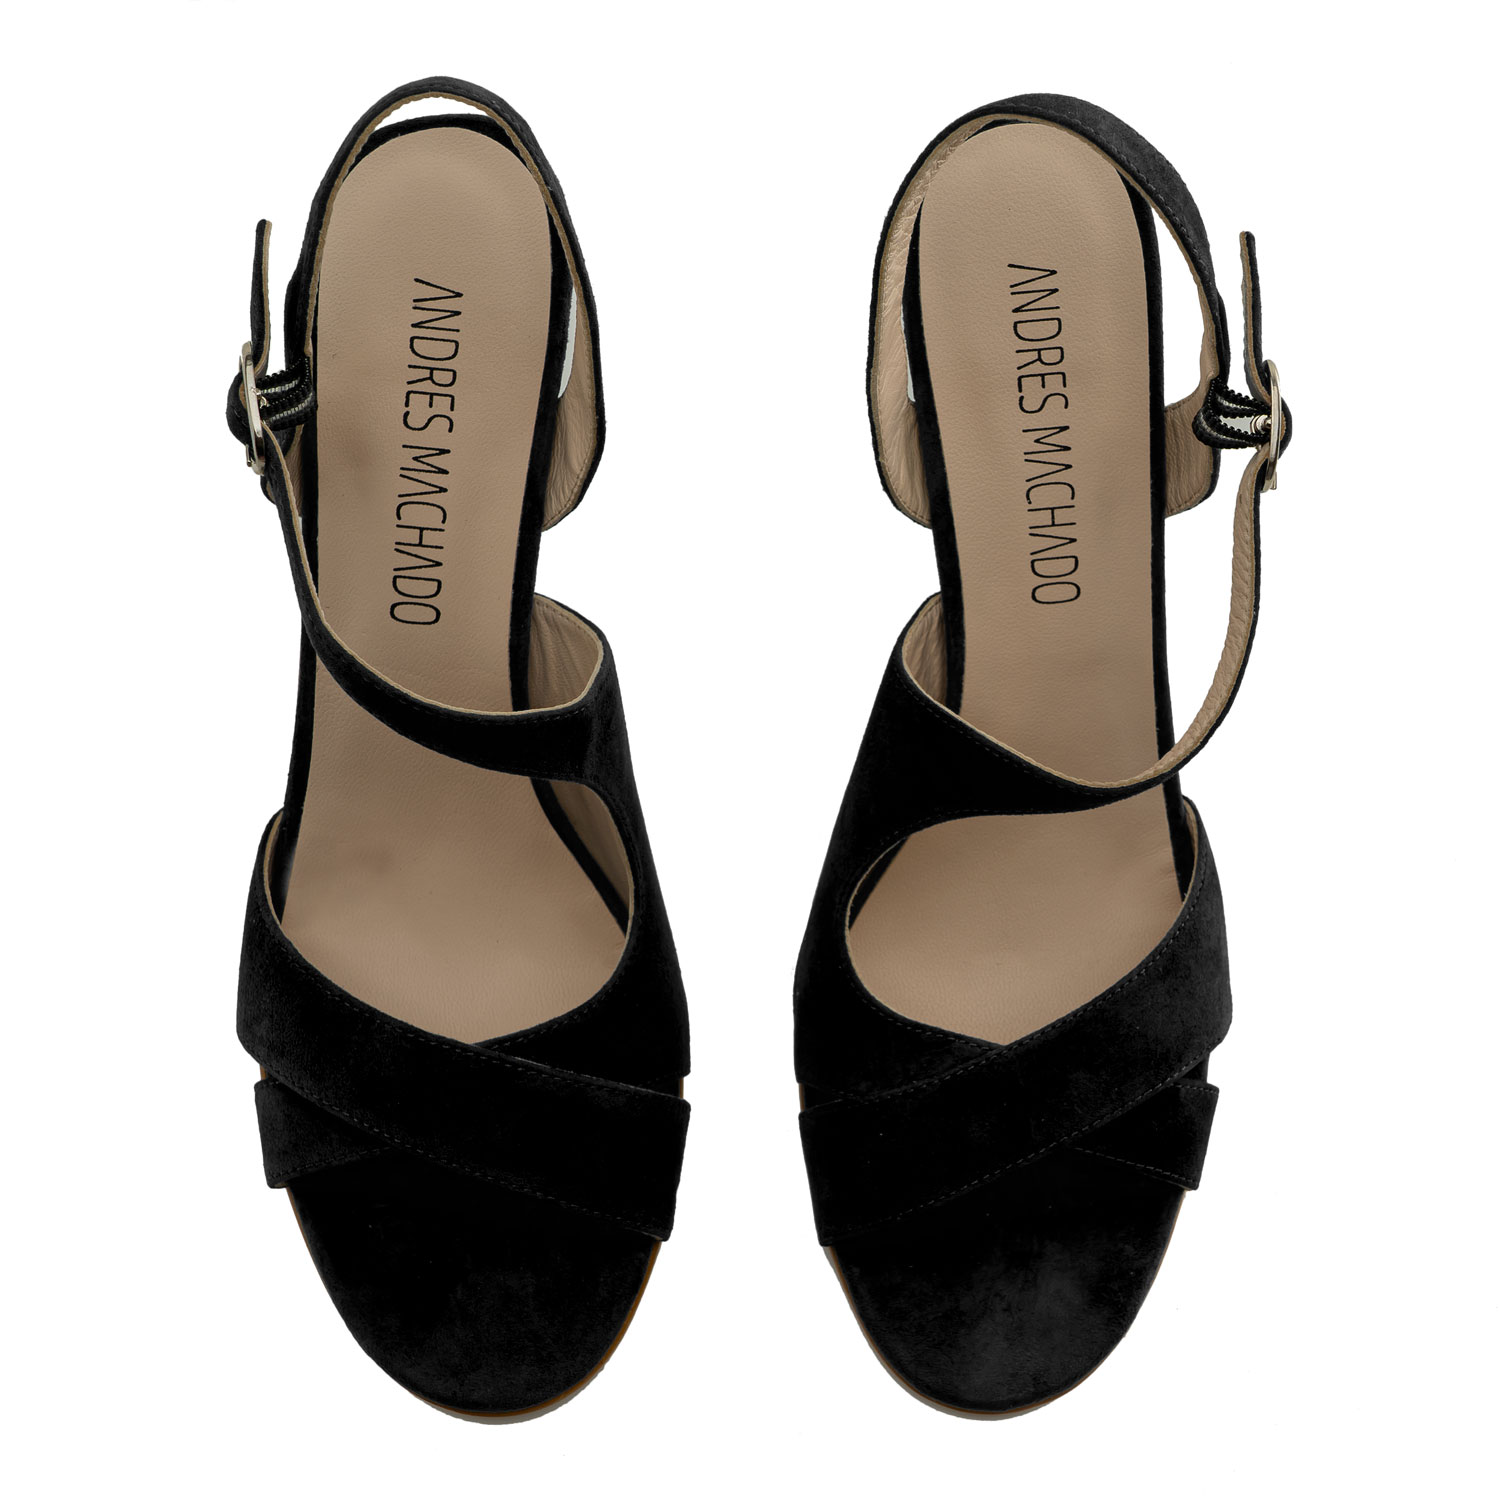 Stiletto Sandals in Black Suede Leather 